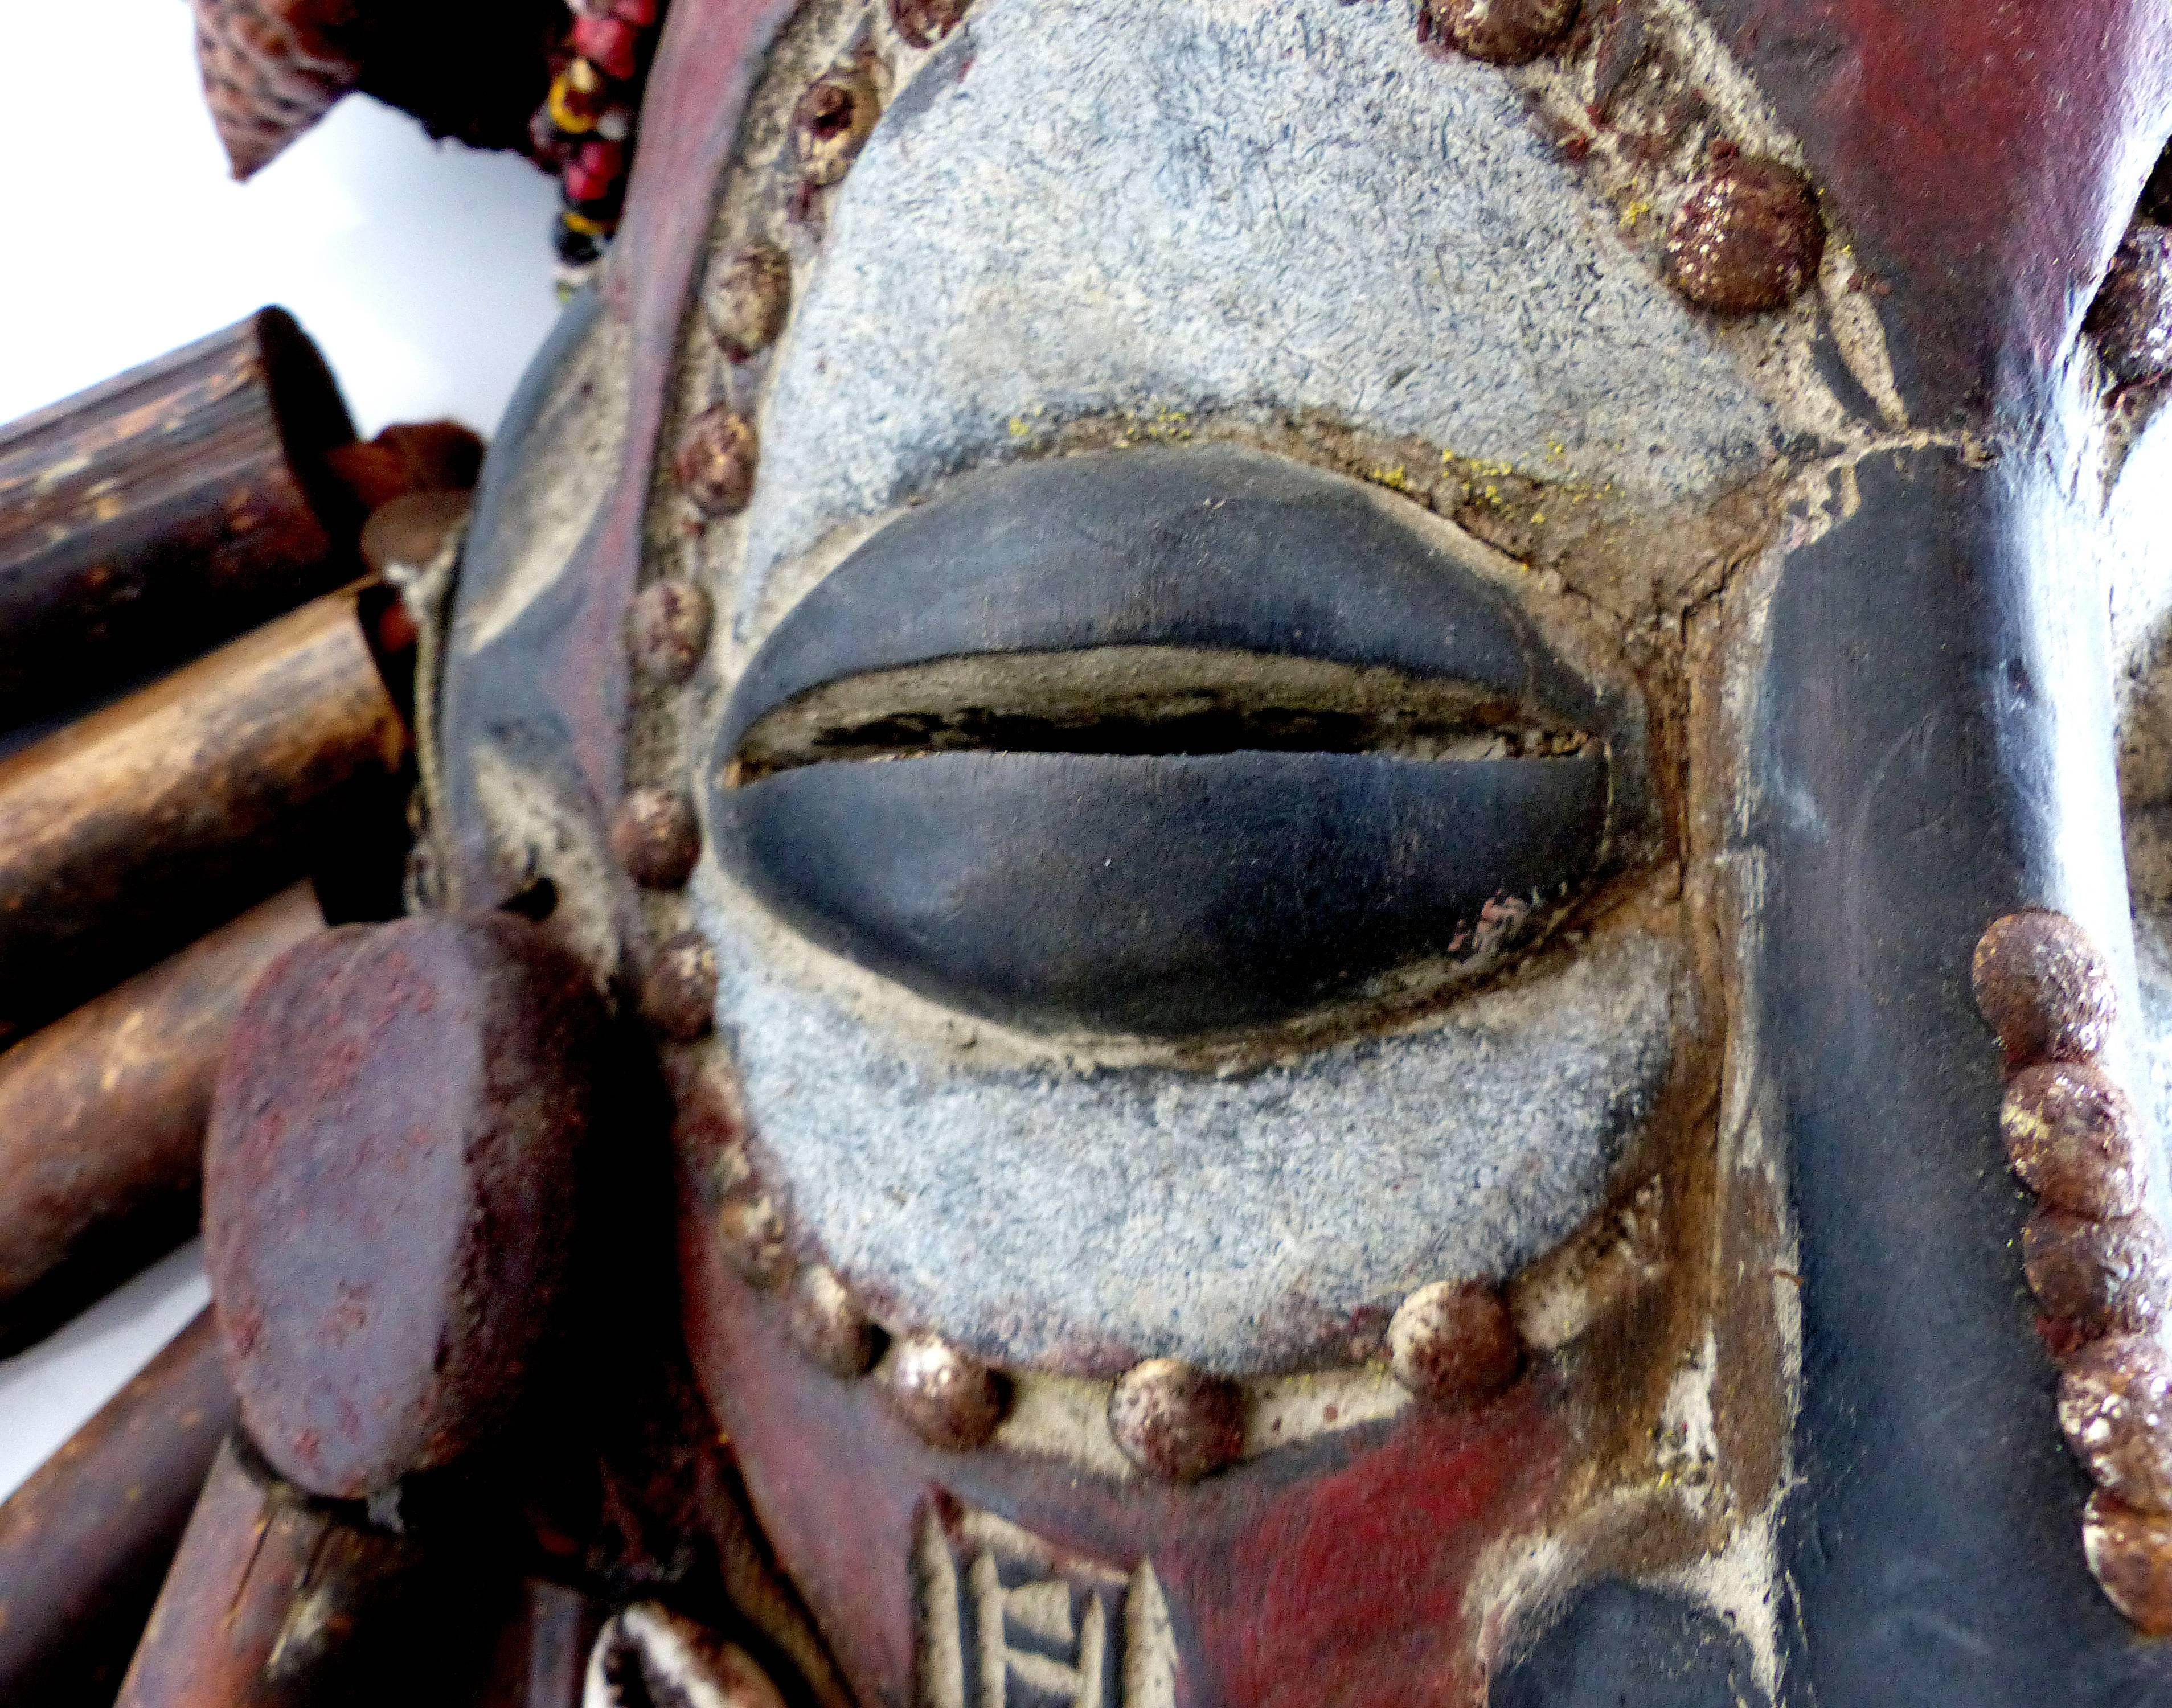 cerimonial mask